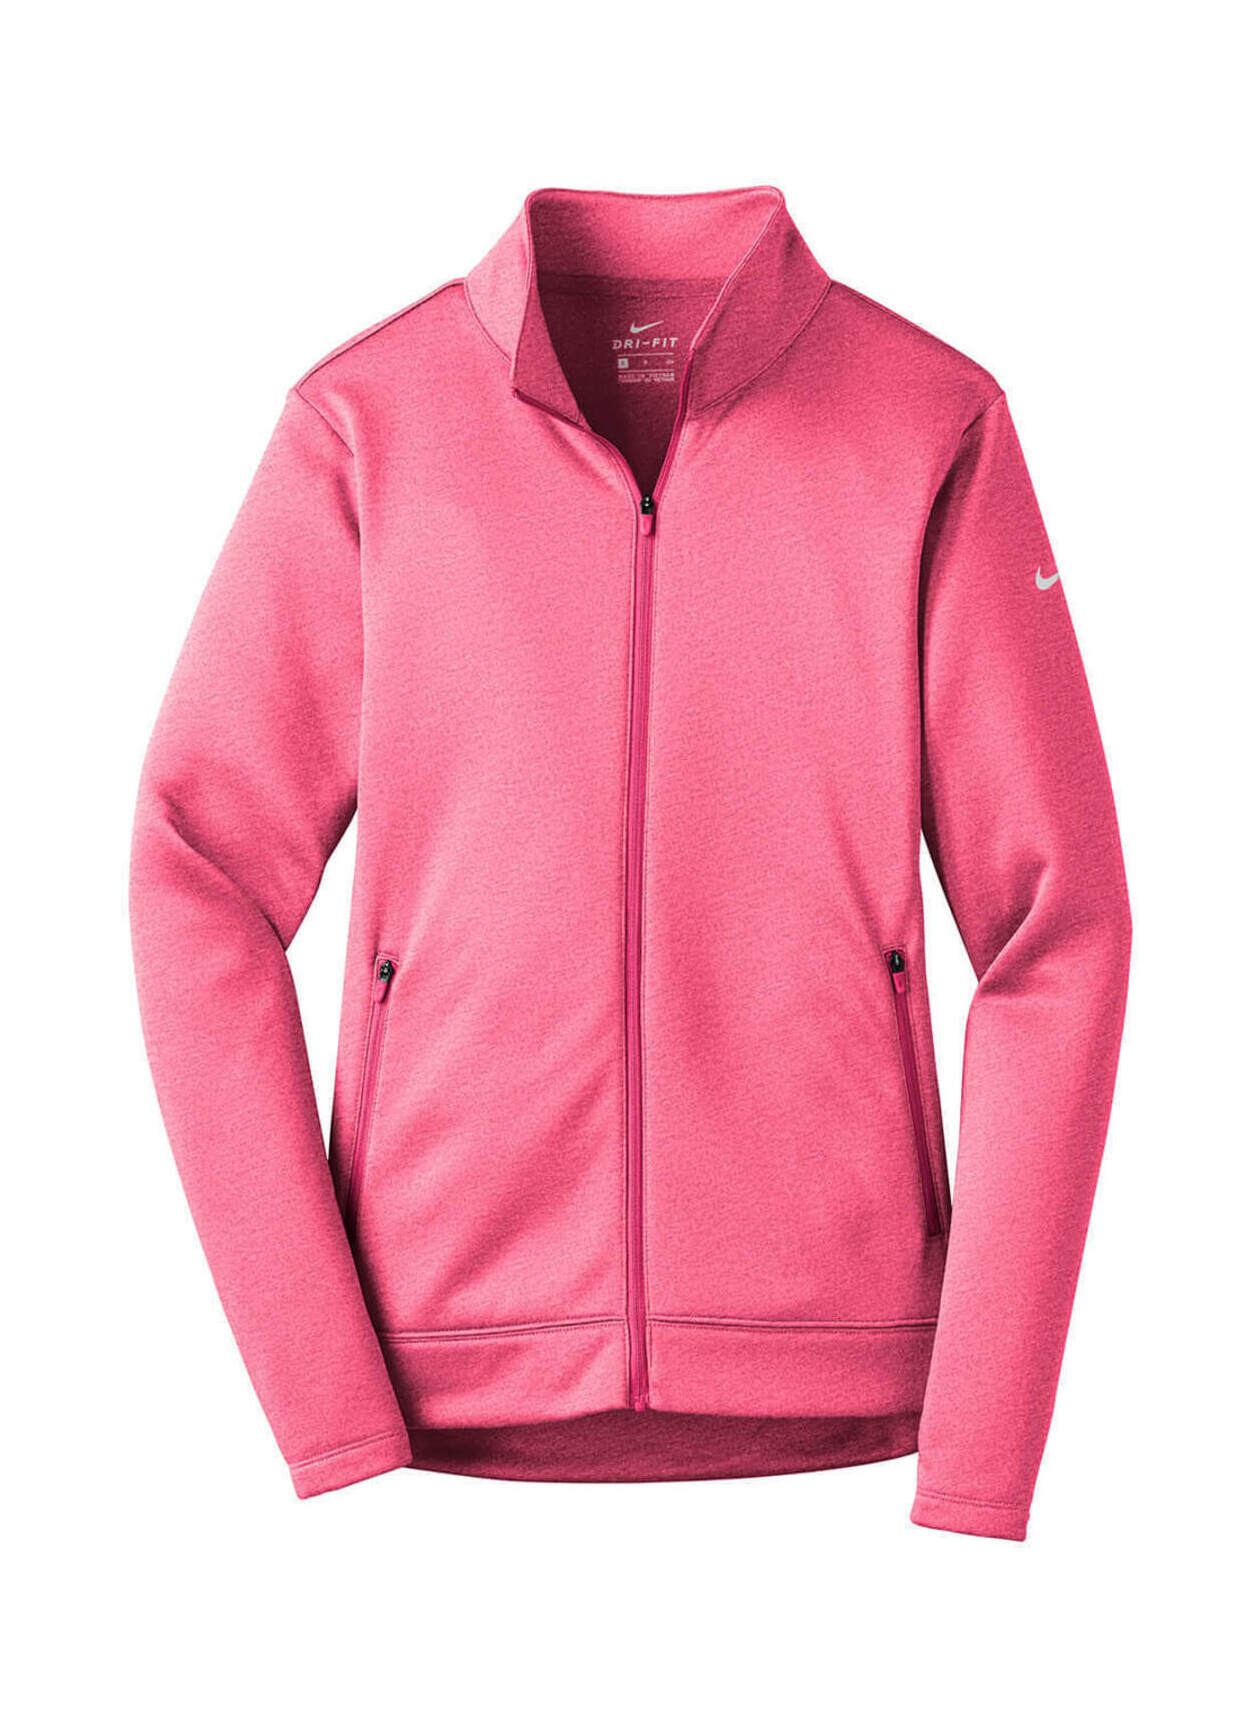 Nike Women's Vivid Pink Heather Therma-FIT Fleece Jacket